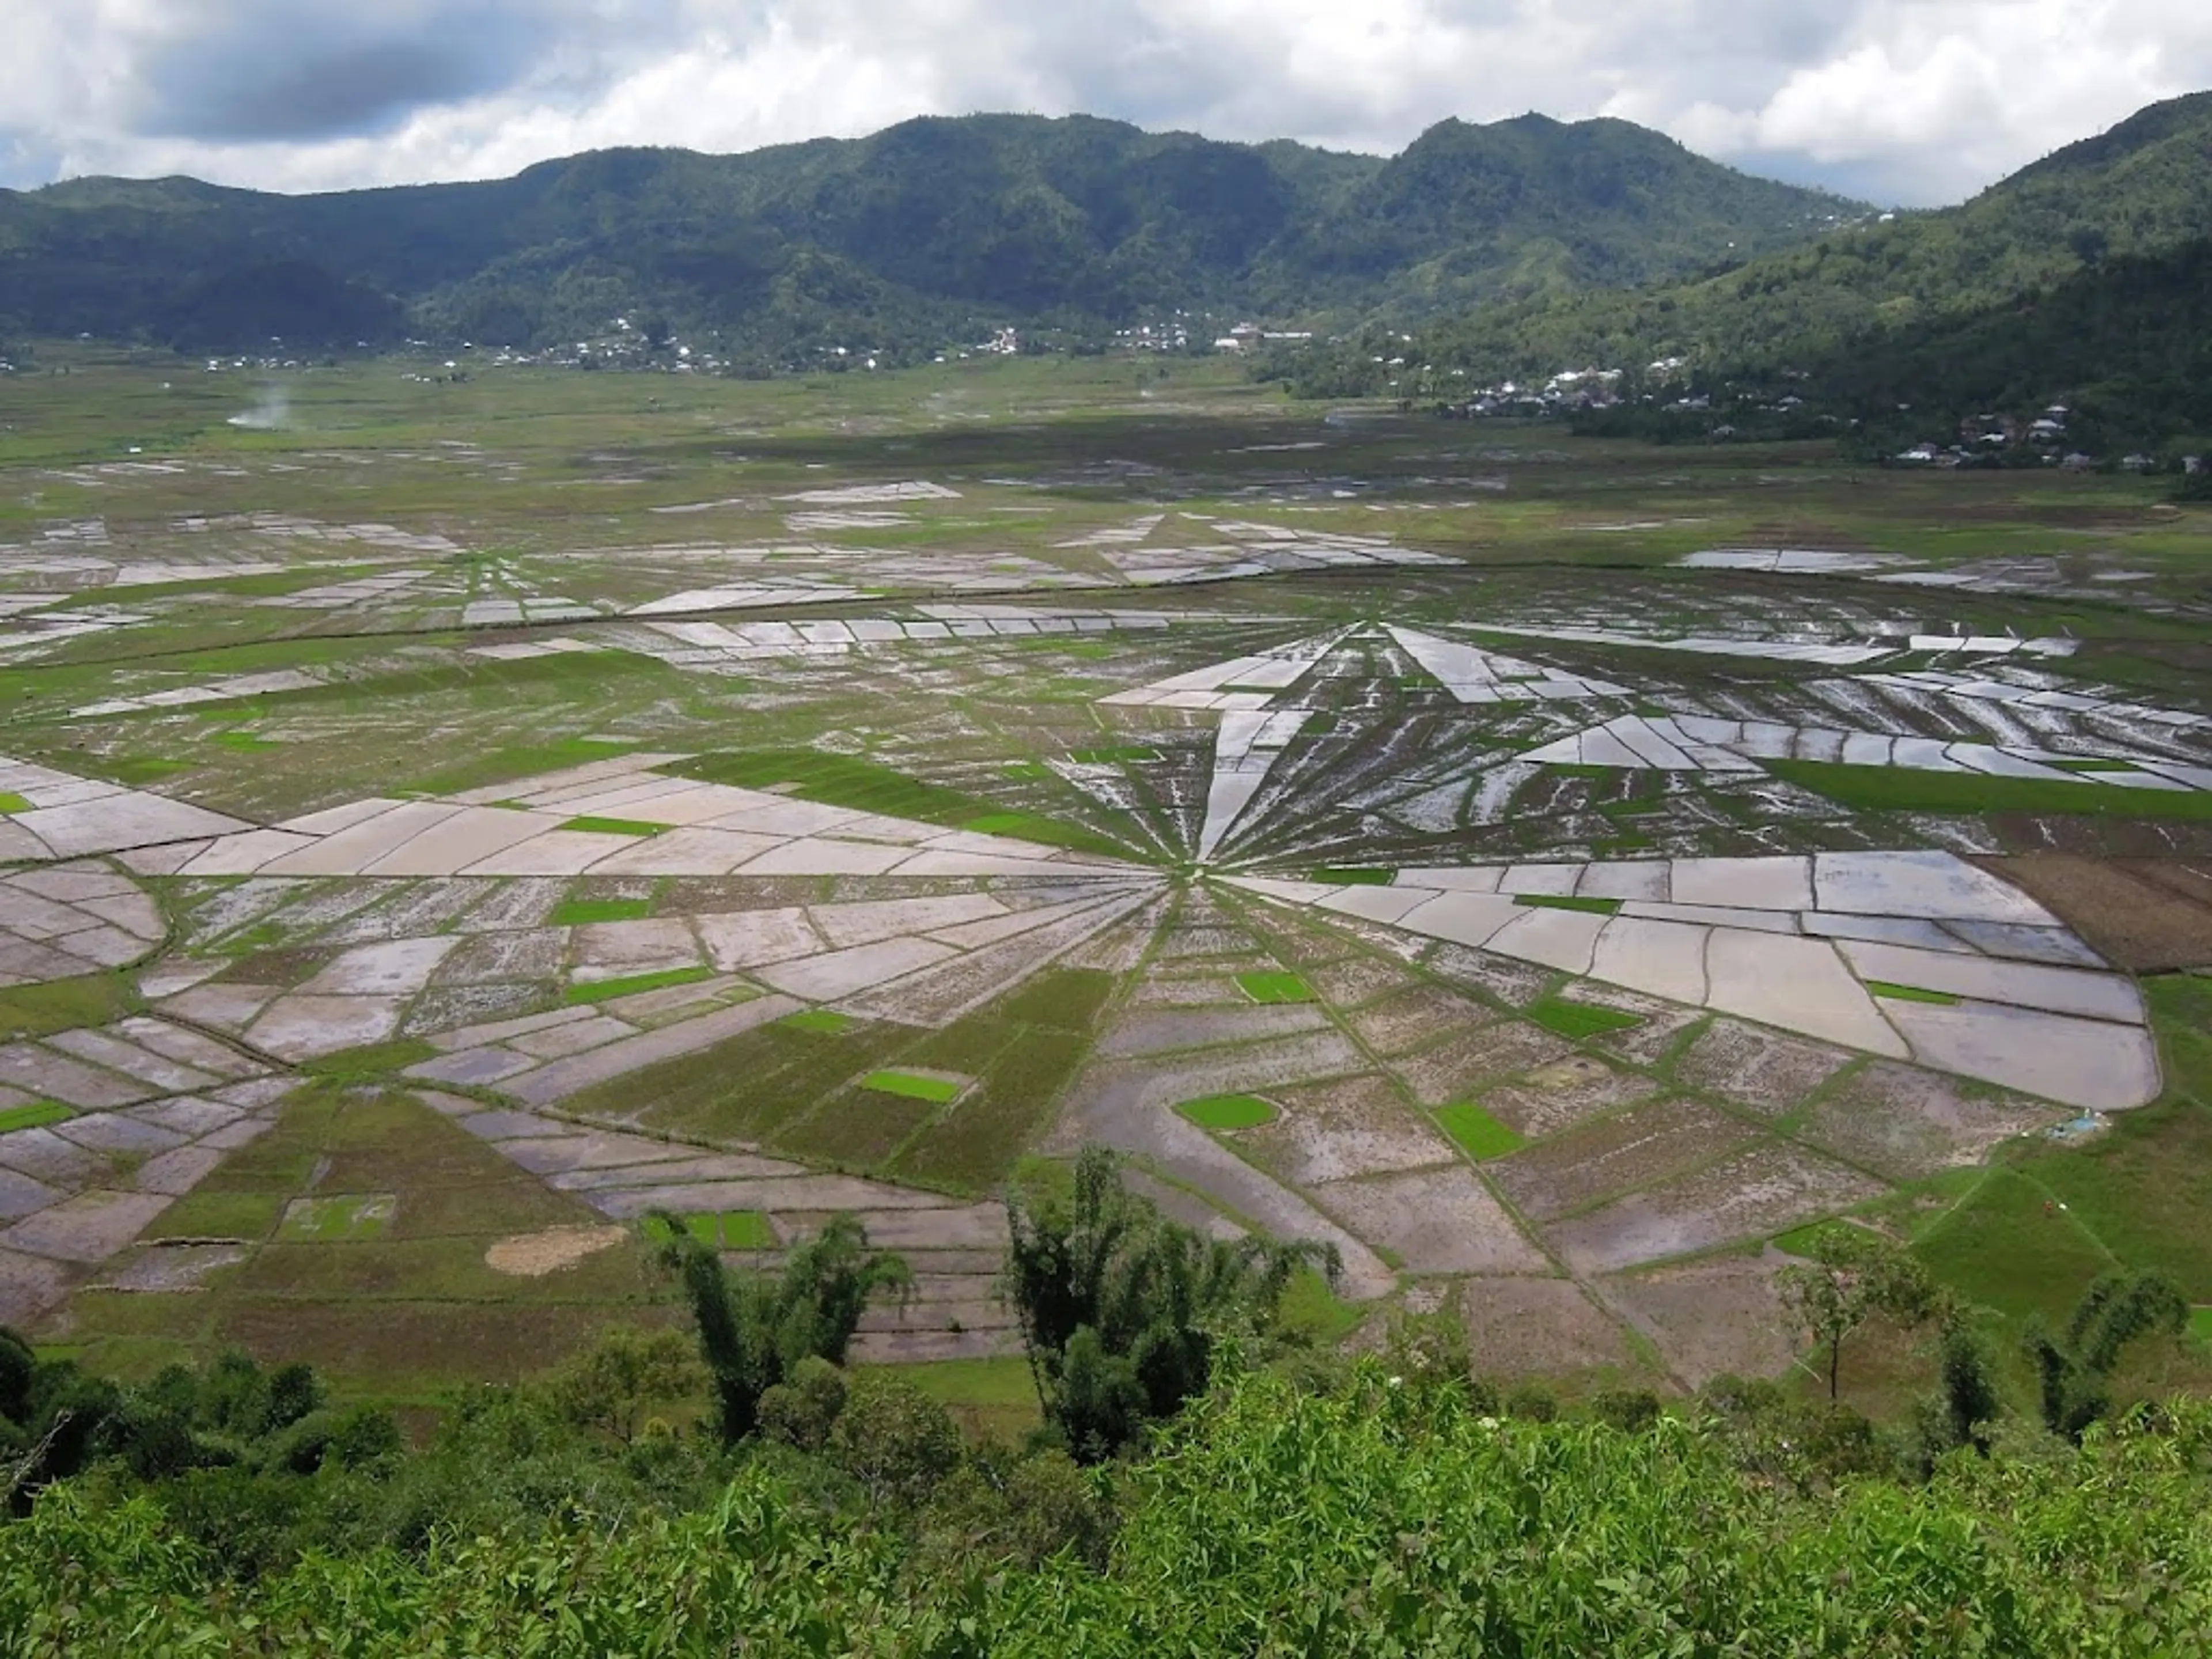 Cancar spider web rice fields